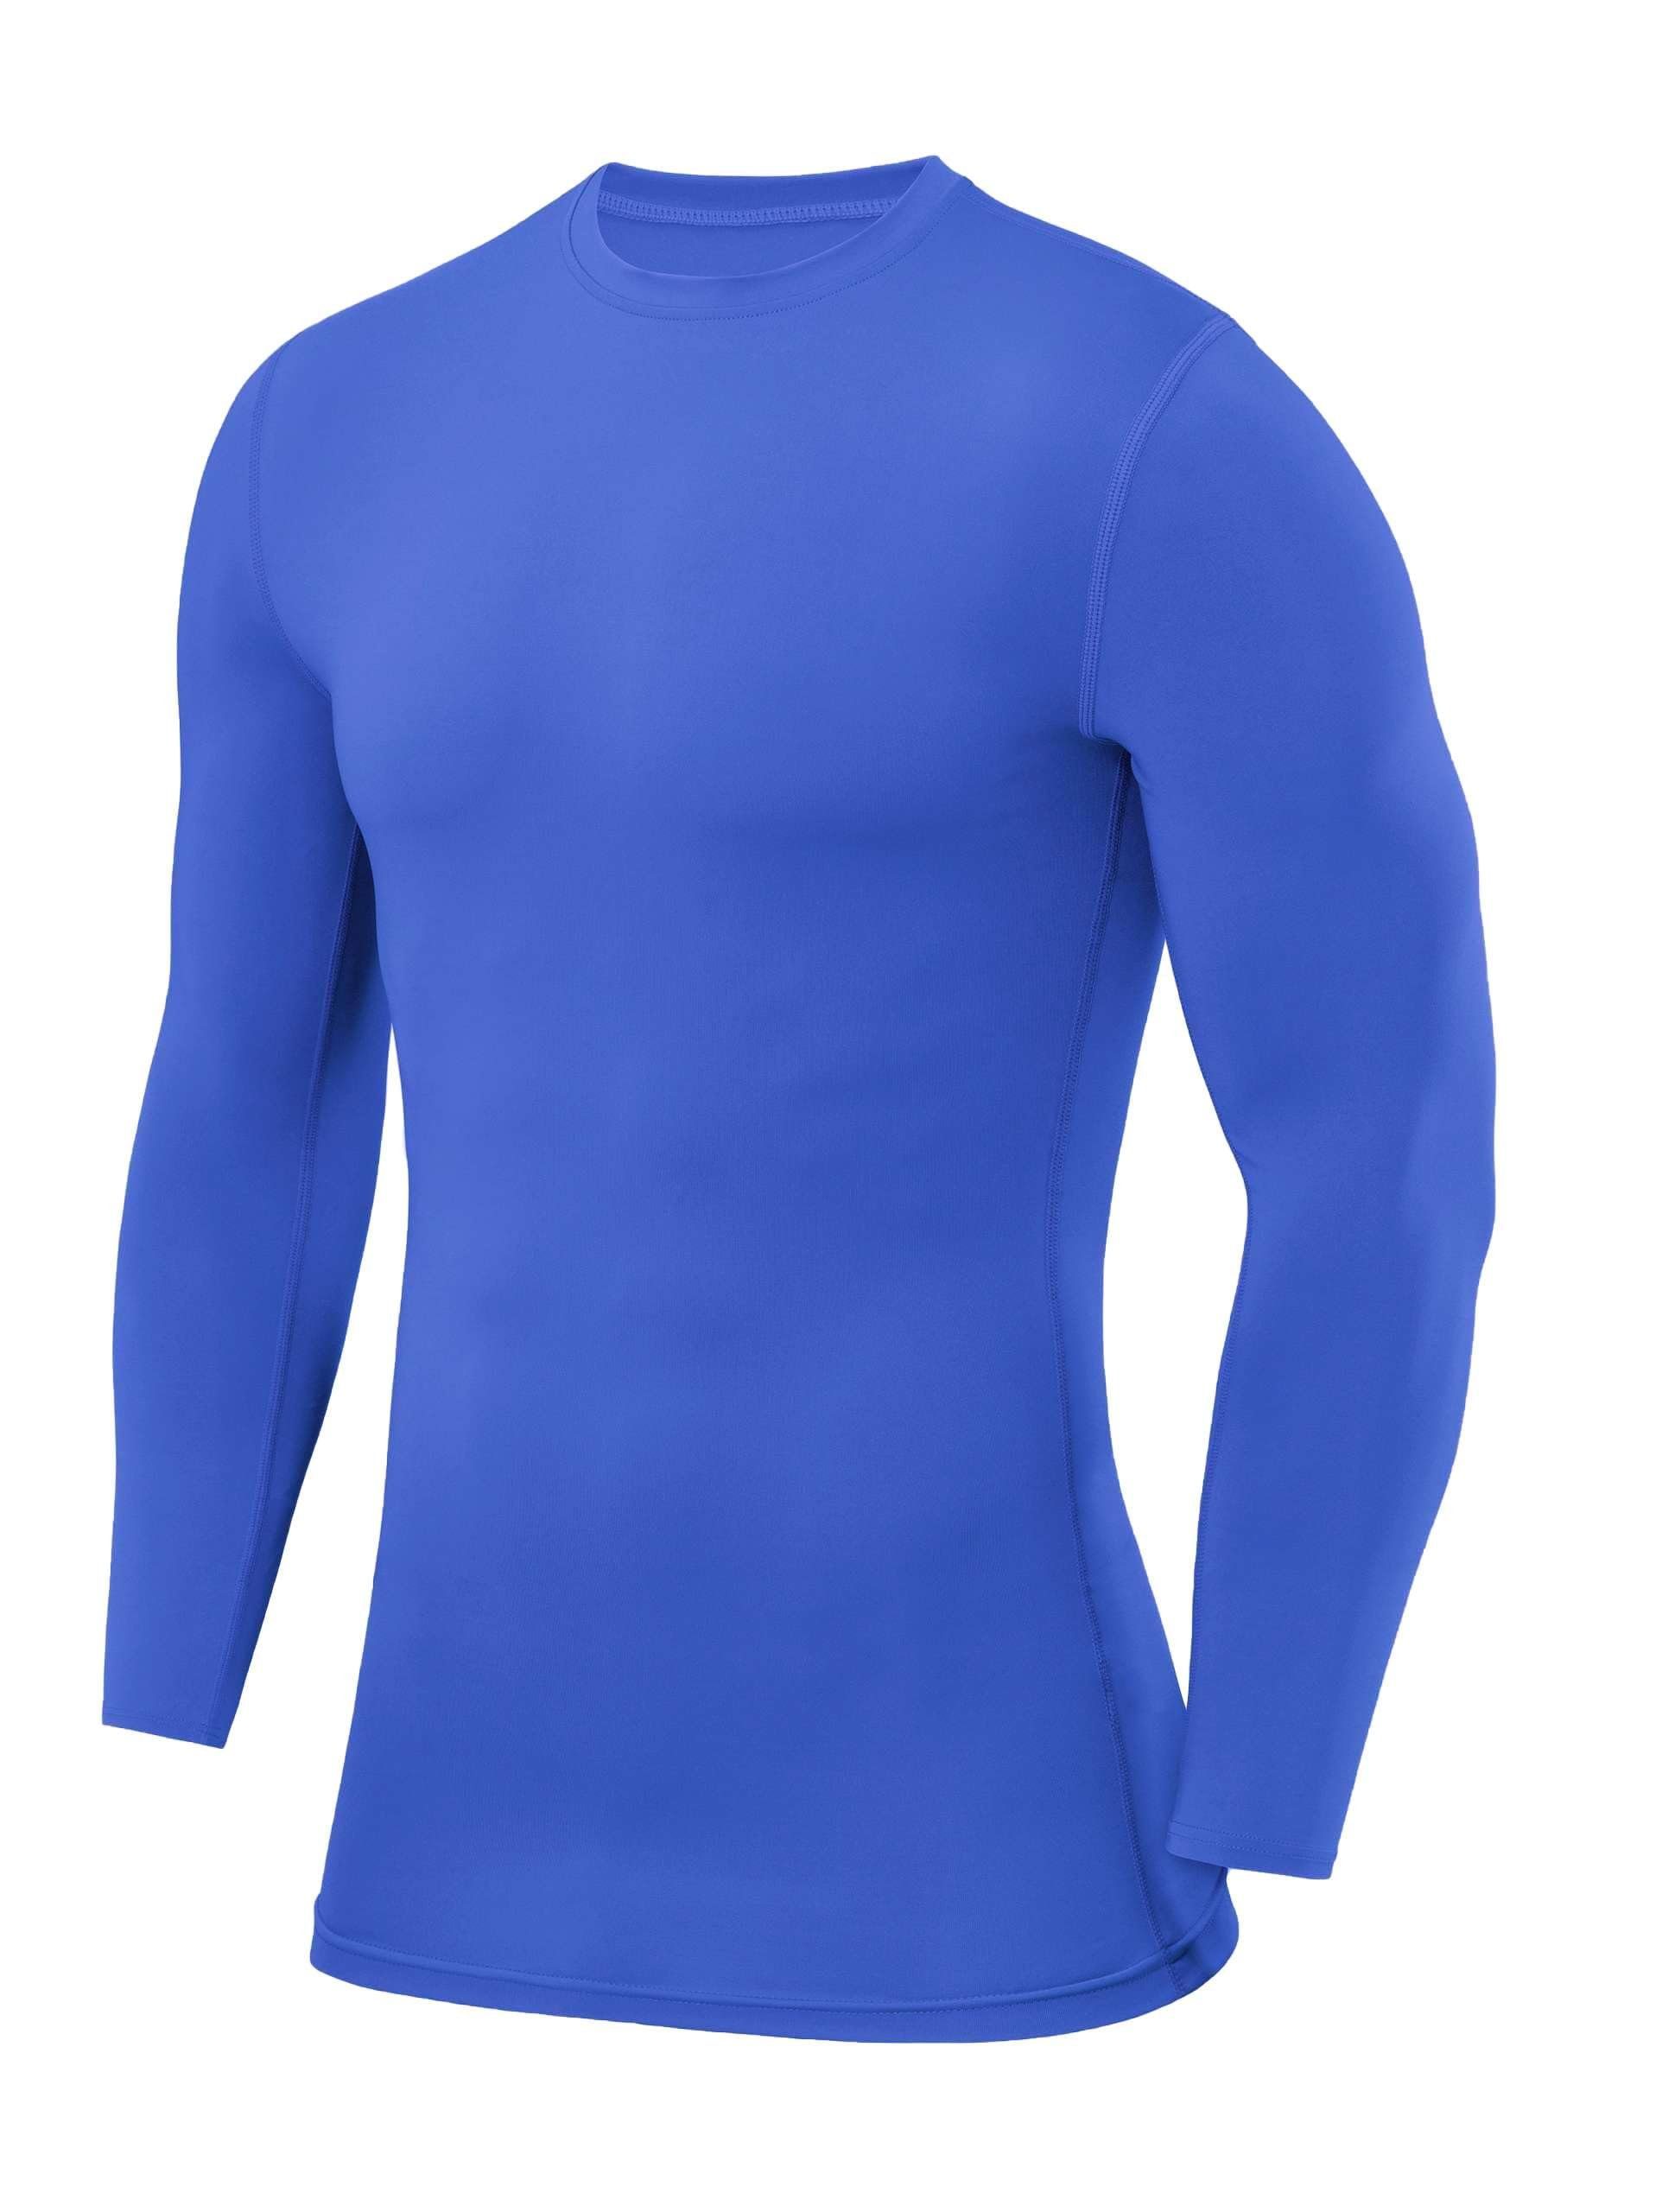 POWERLAYER Langarmshirt PowerLayer Kompressions Shirt Herren - Leuchtend Blau